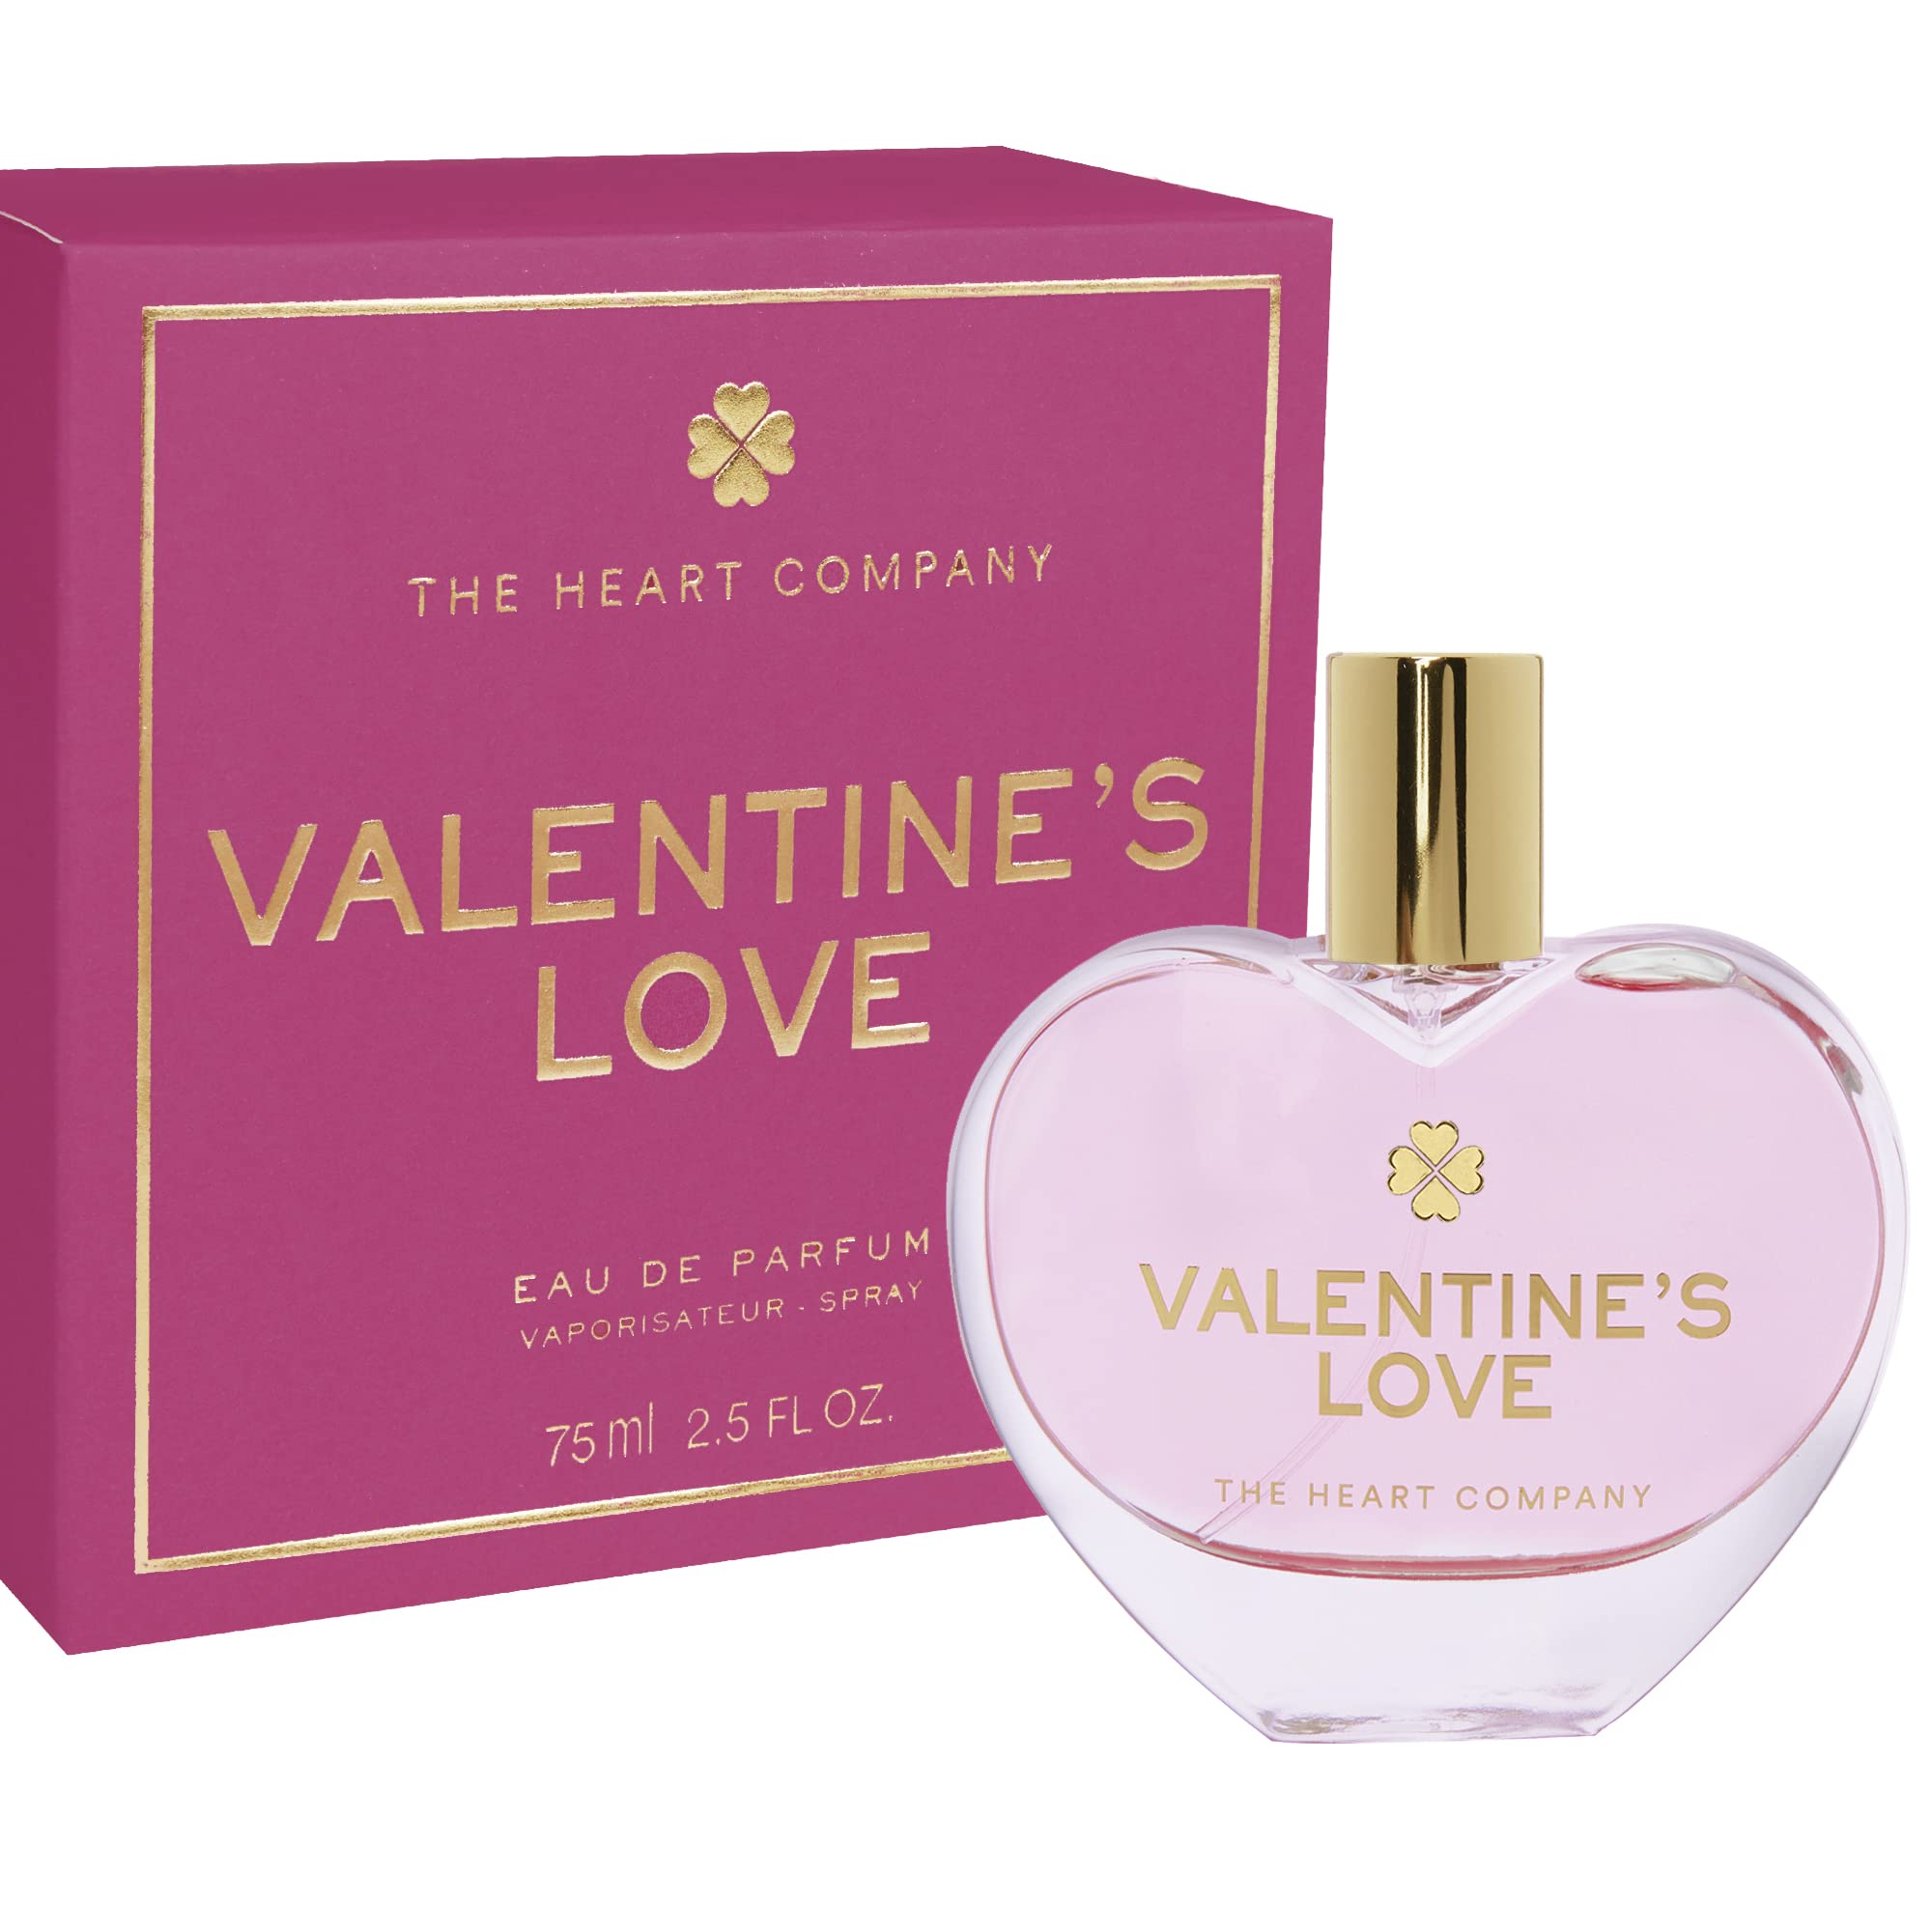 THE HEART COMPANY | Valentine's Love Perfume for women | Floral Sweet Fragrance | Valentine's Day Gift | Vegan Heart Shaped Perfume 75ml - 2.5 fl oz.